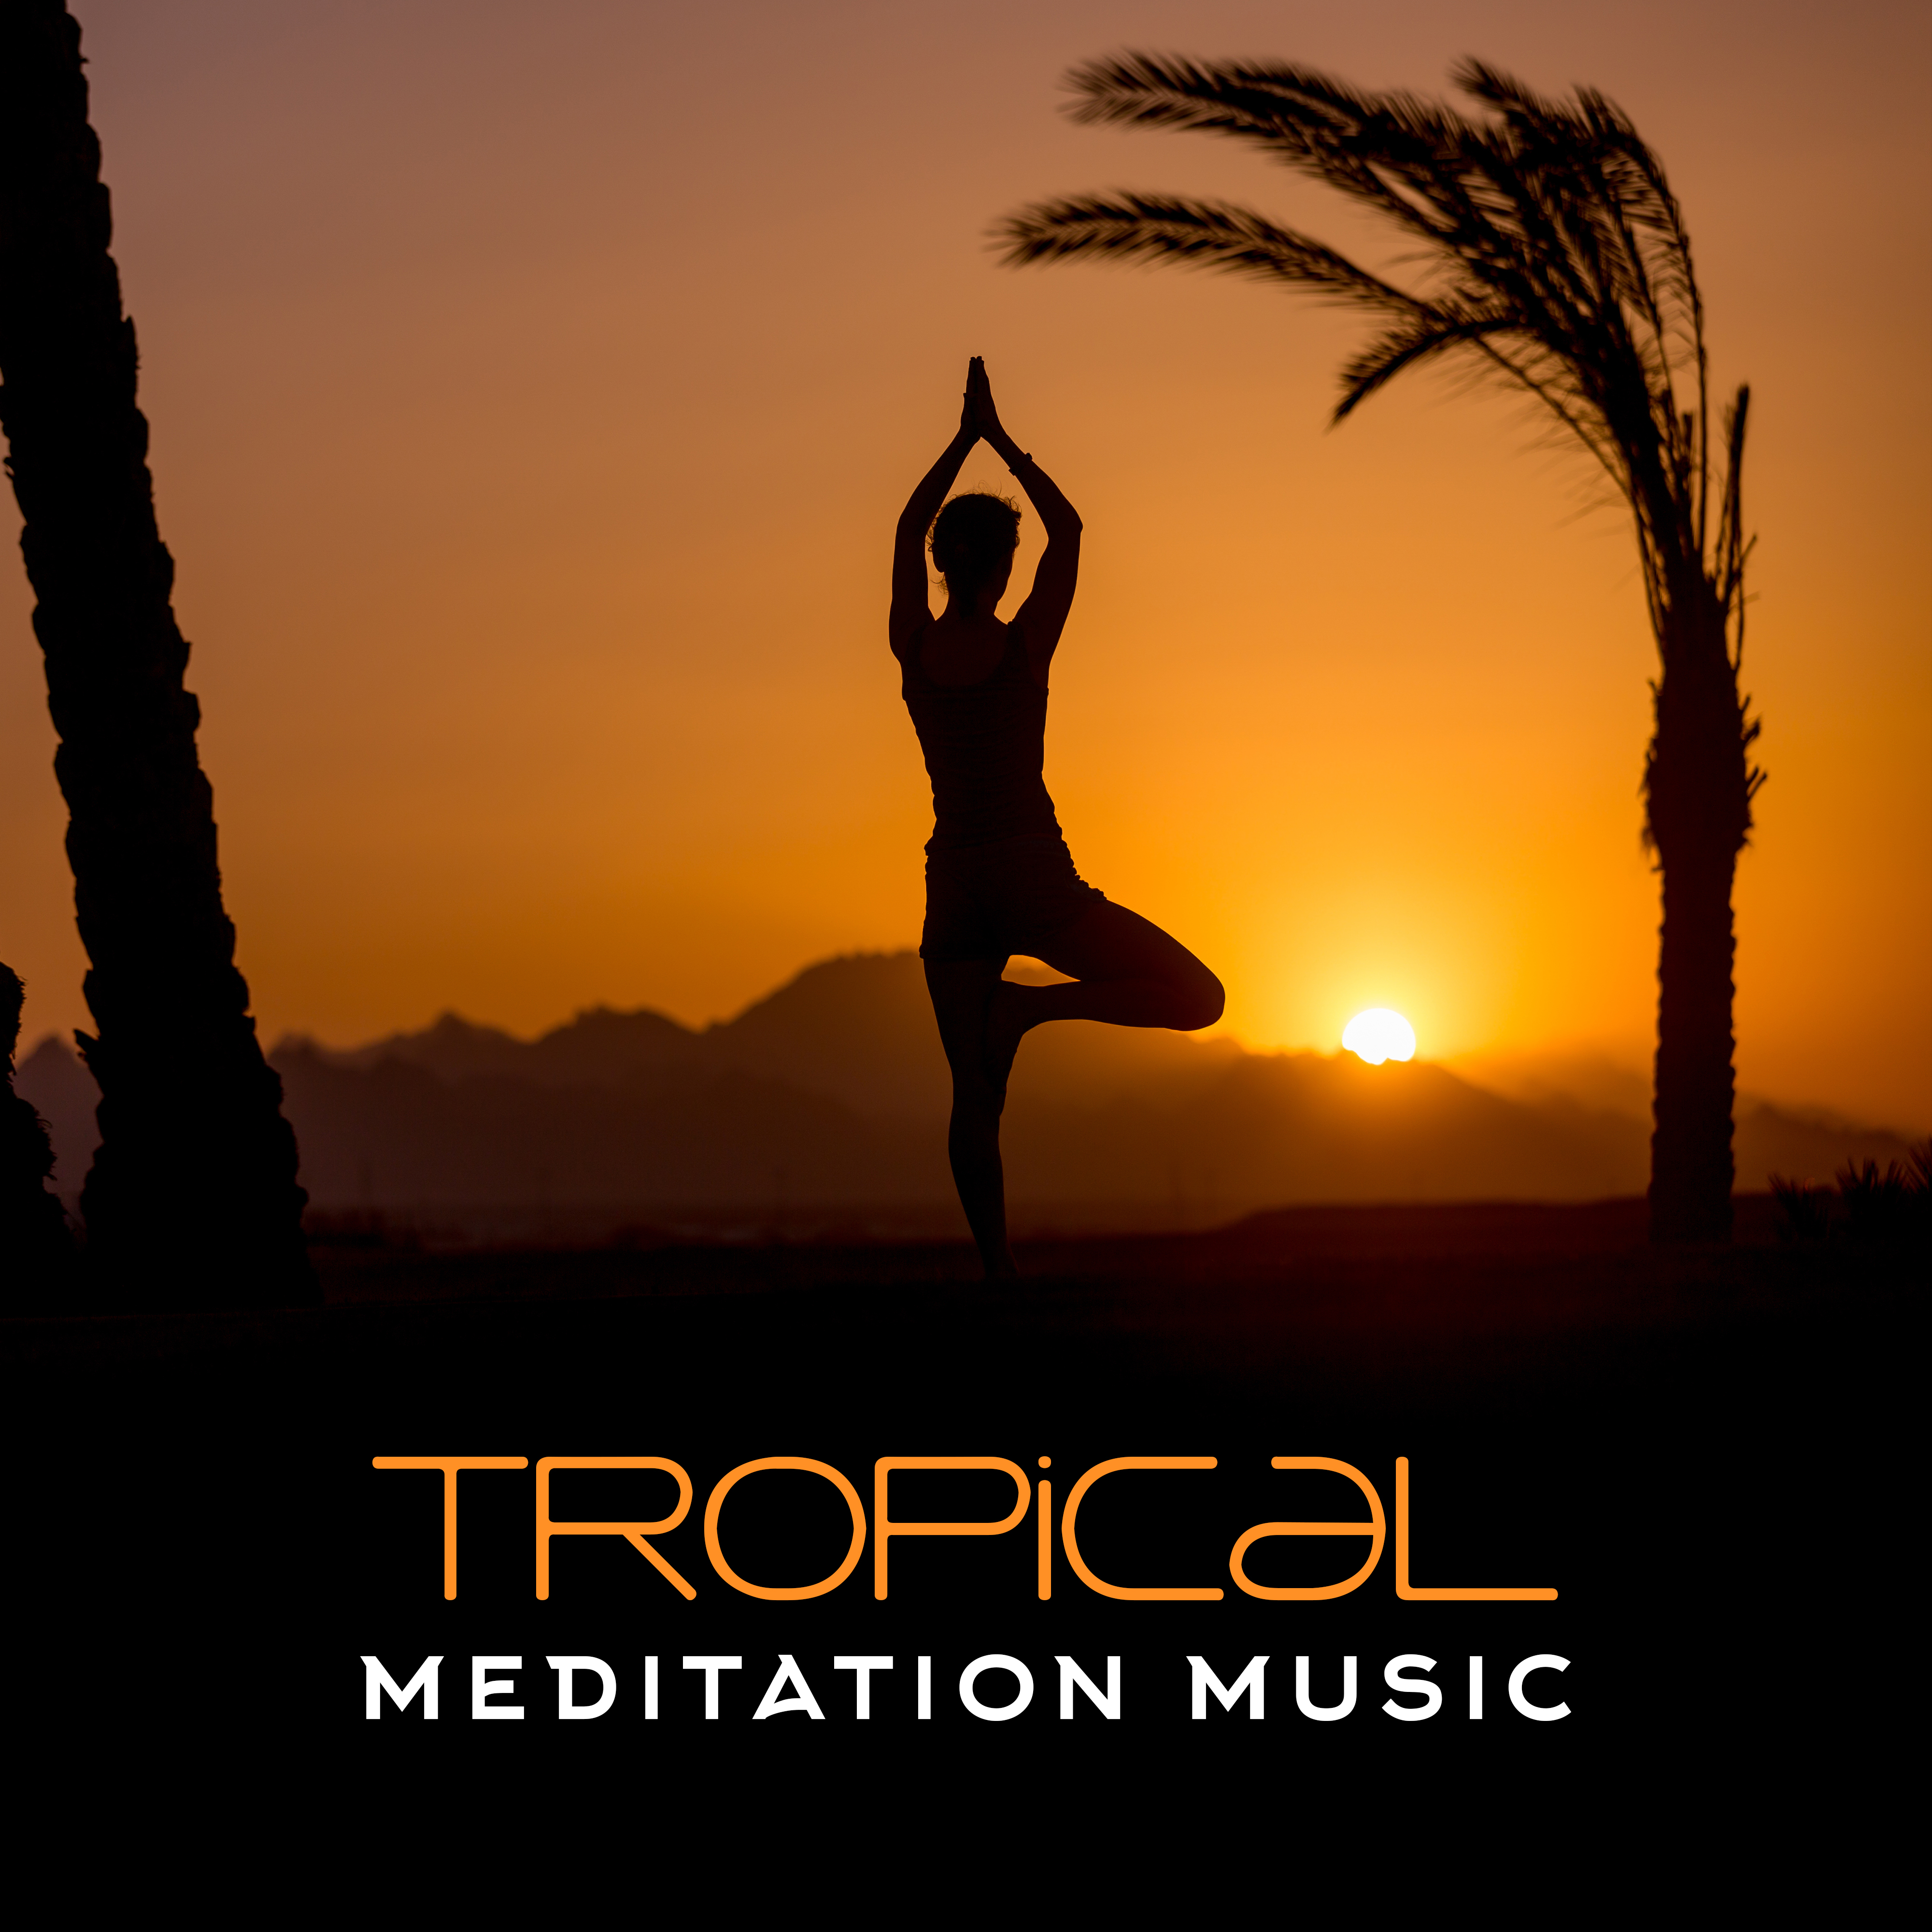 Tropical Meditation Music